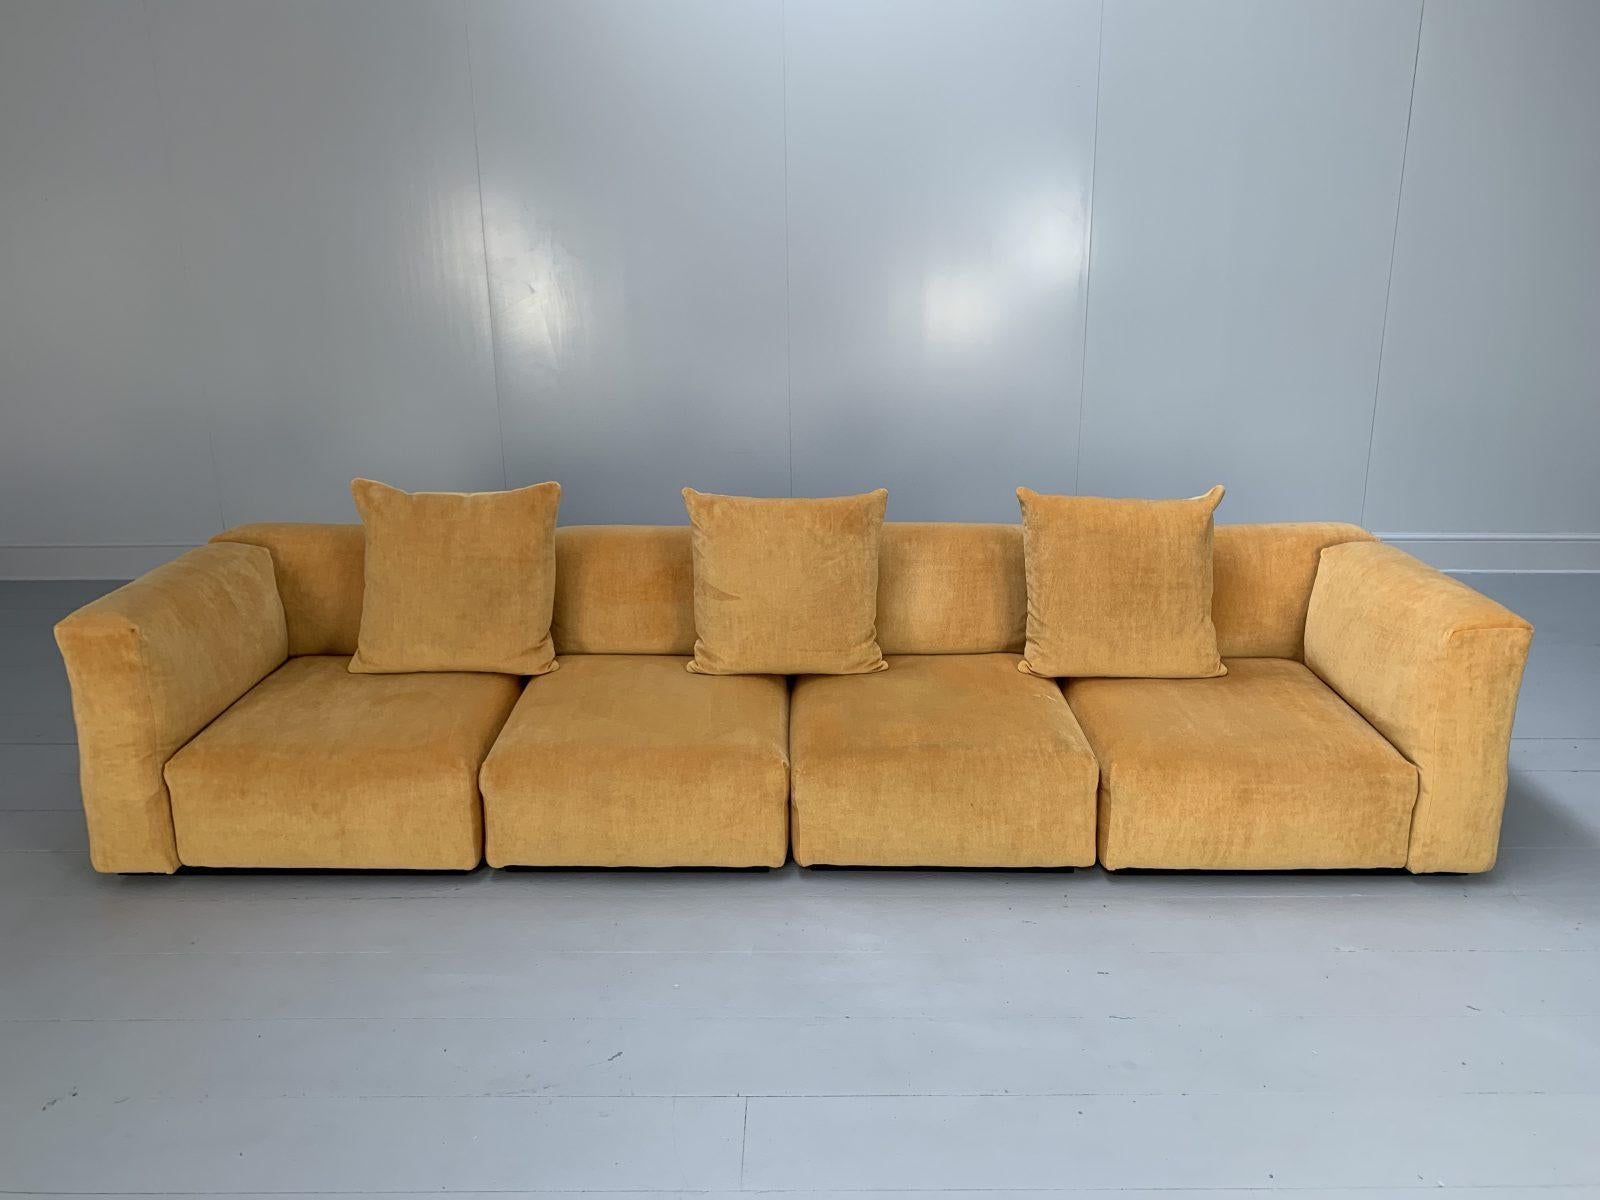 Cassina “271 Mex Cube” 4-Seat Sectional Sofa in Gold Mohair Velvet For Sale 4